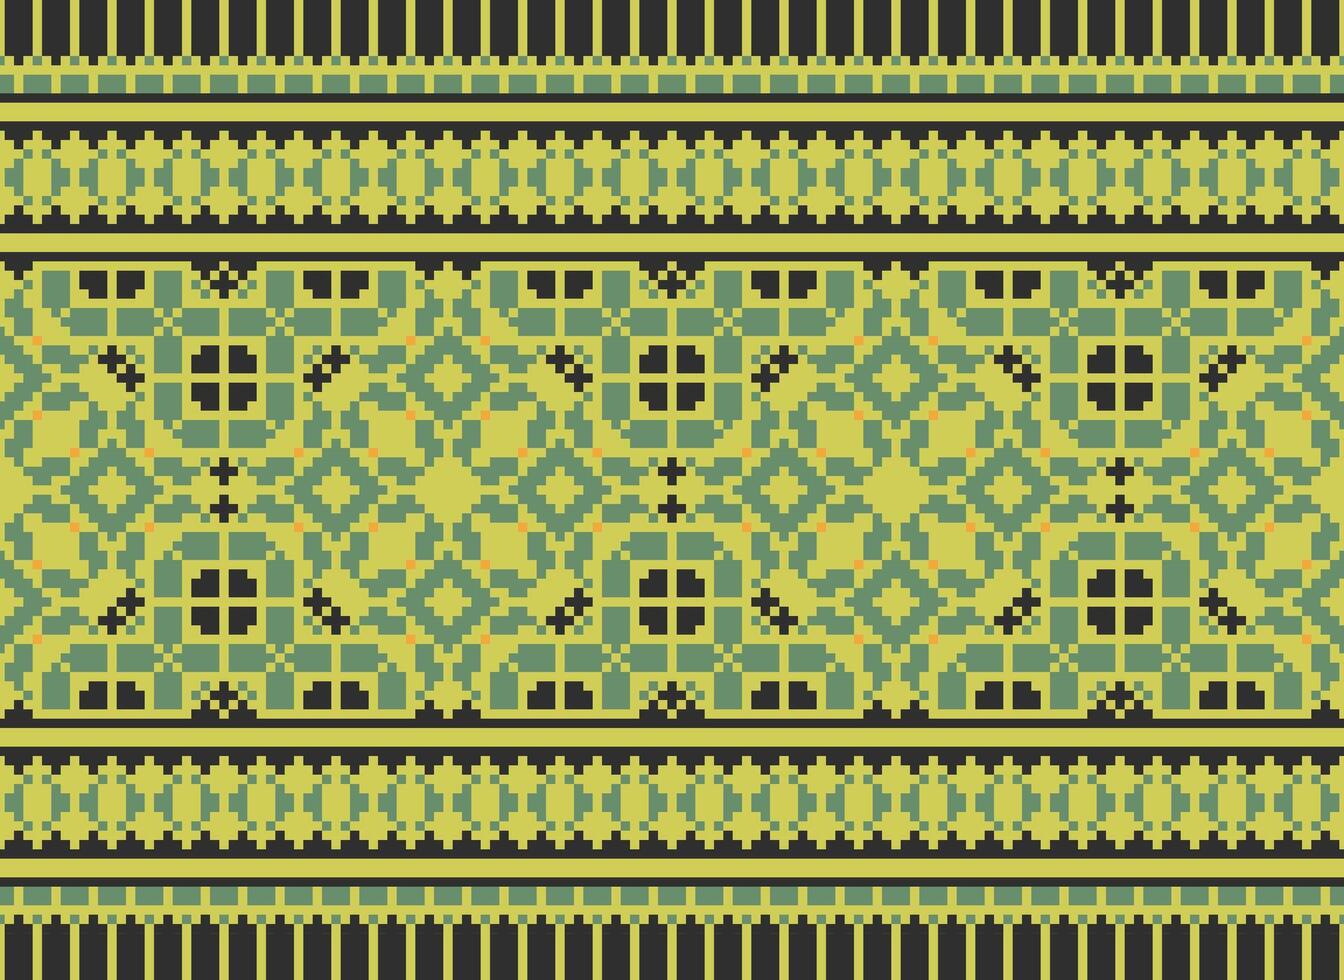 pixel kruis steek patroon met bloemen ontwerpen. traditioneel kruis steek handwerk. meetkundig etnisch patroon, borduurwerk, textiel versiering, kleding stof, hand- gestikt patroon, cultureel stiksels vector